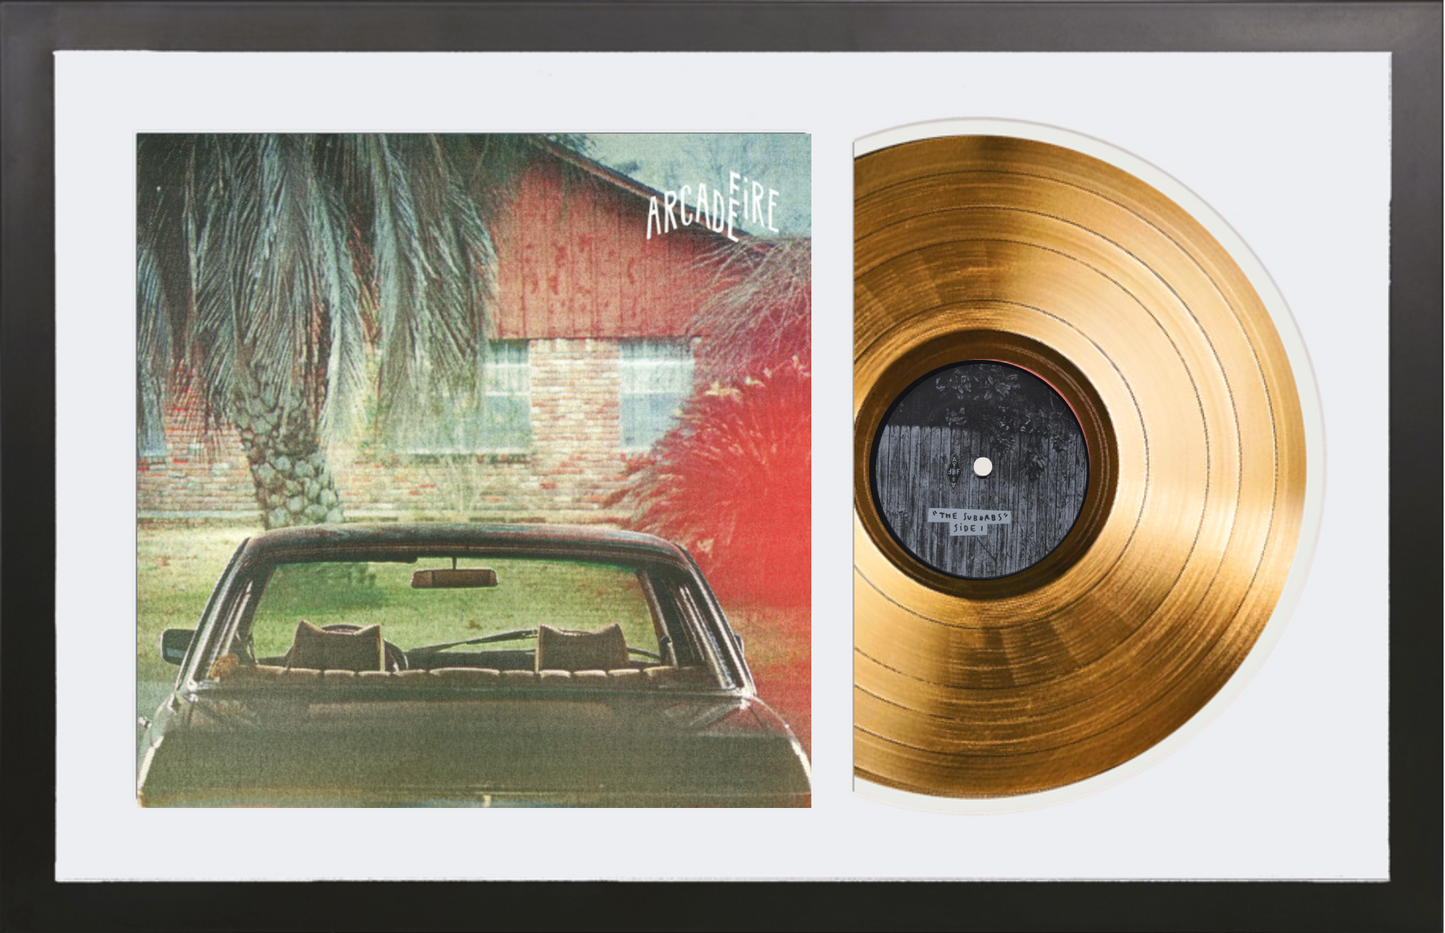 Arcade Fire - The Suburbs - 14K Gold Plated Vinyl